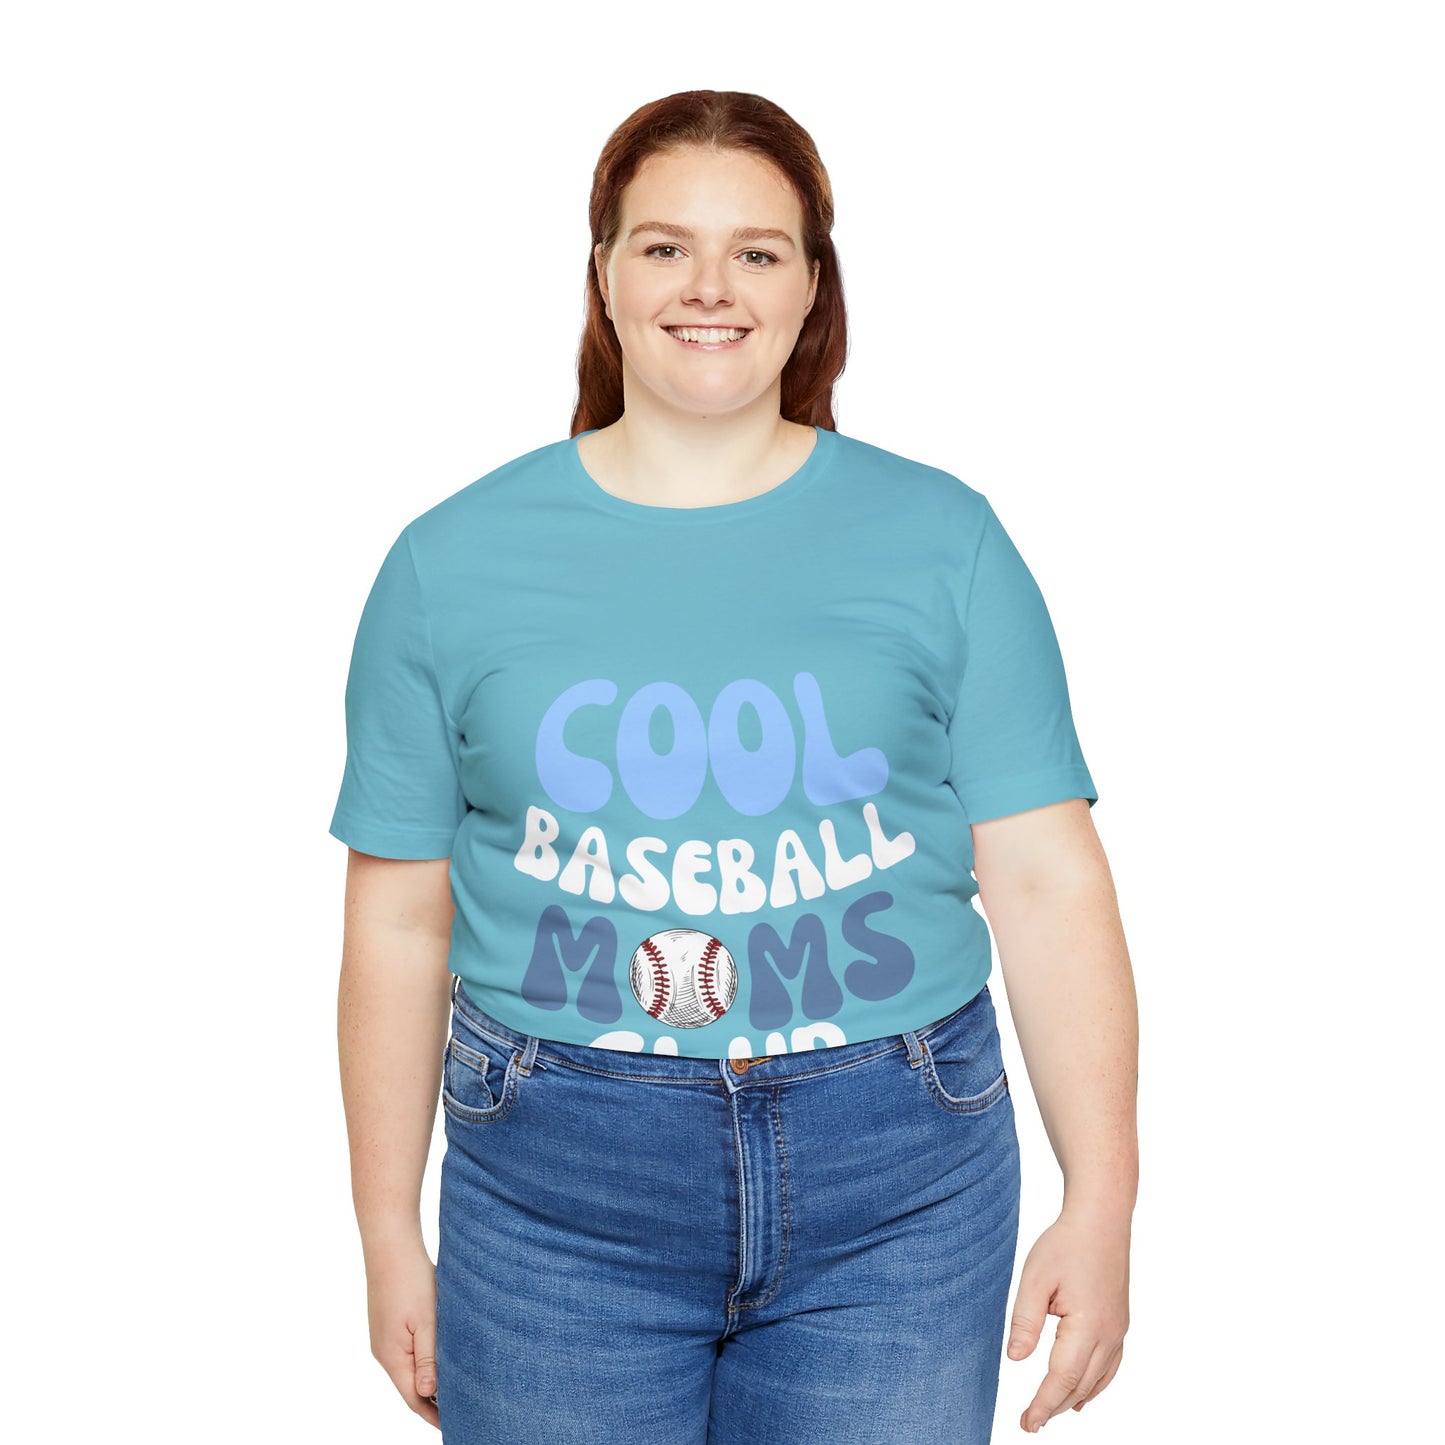 Cool Baseball Moms Club - Unisex Jersey Short Sleeve Tee